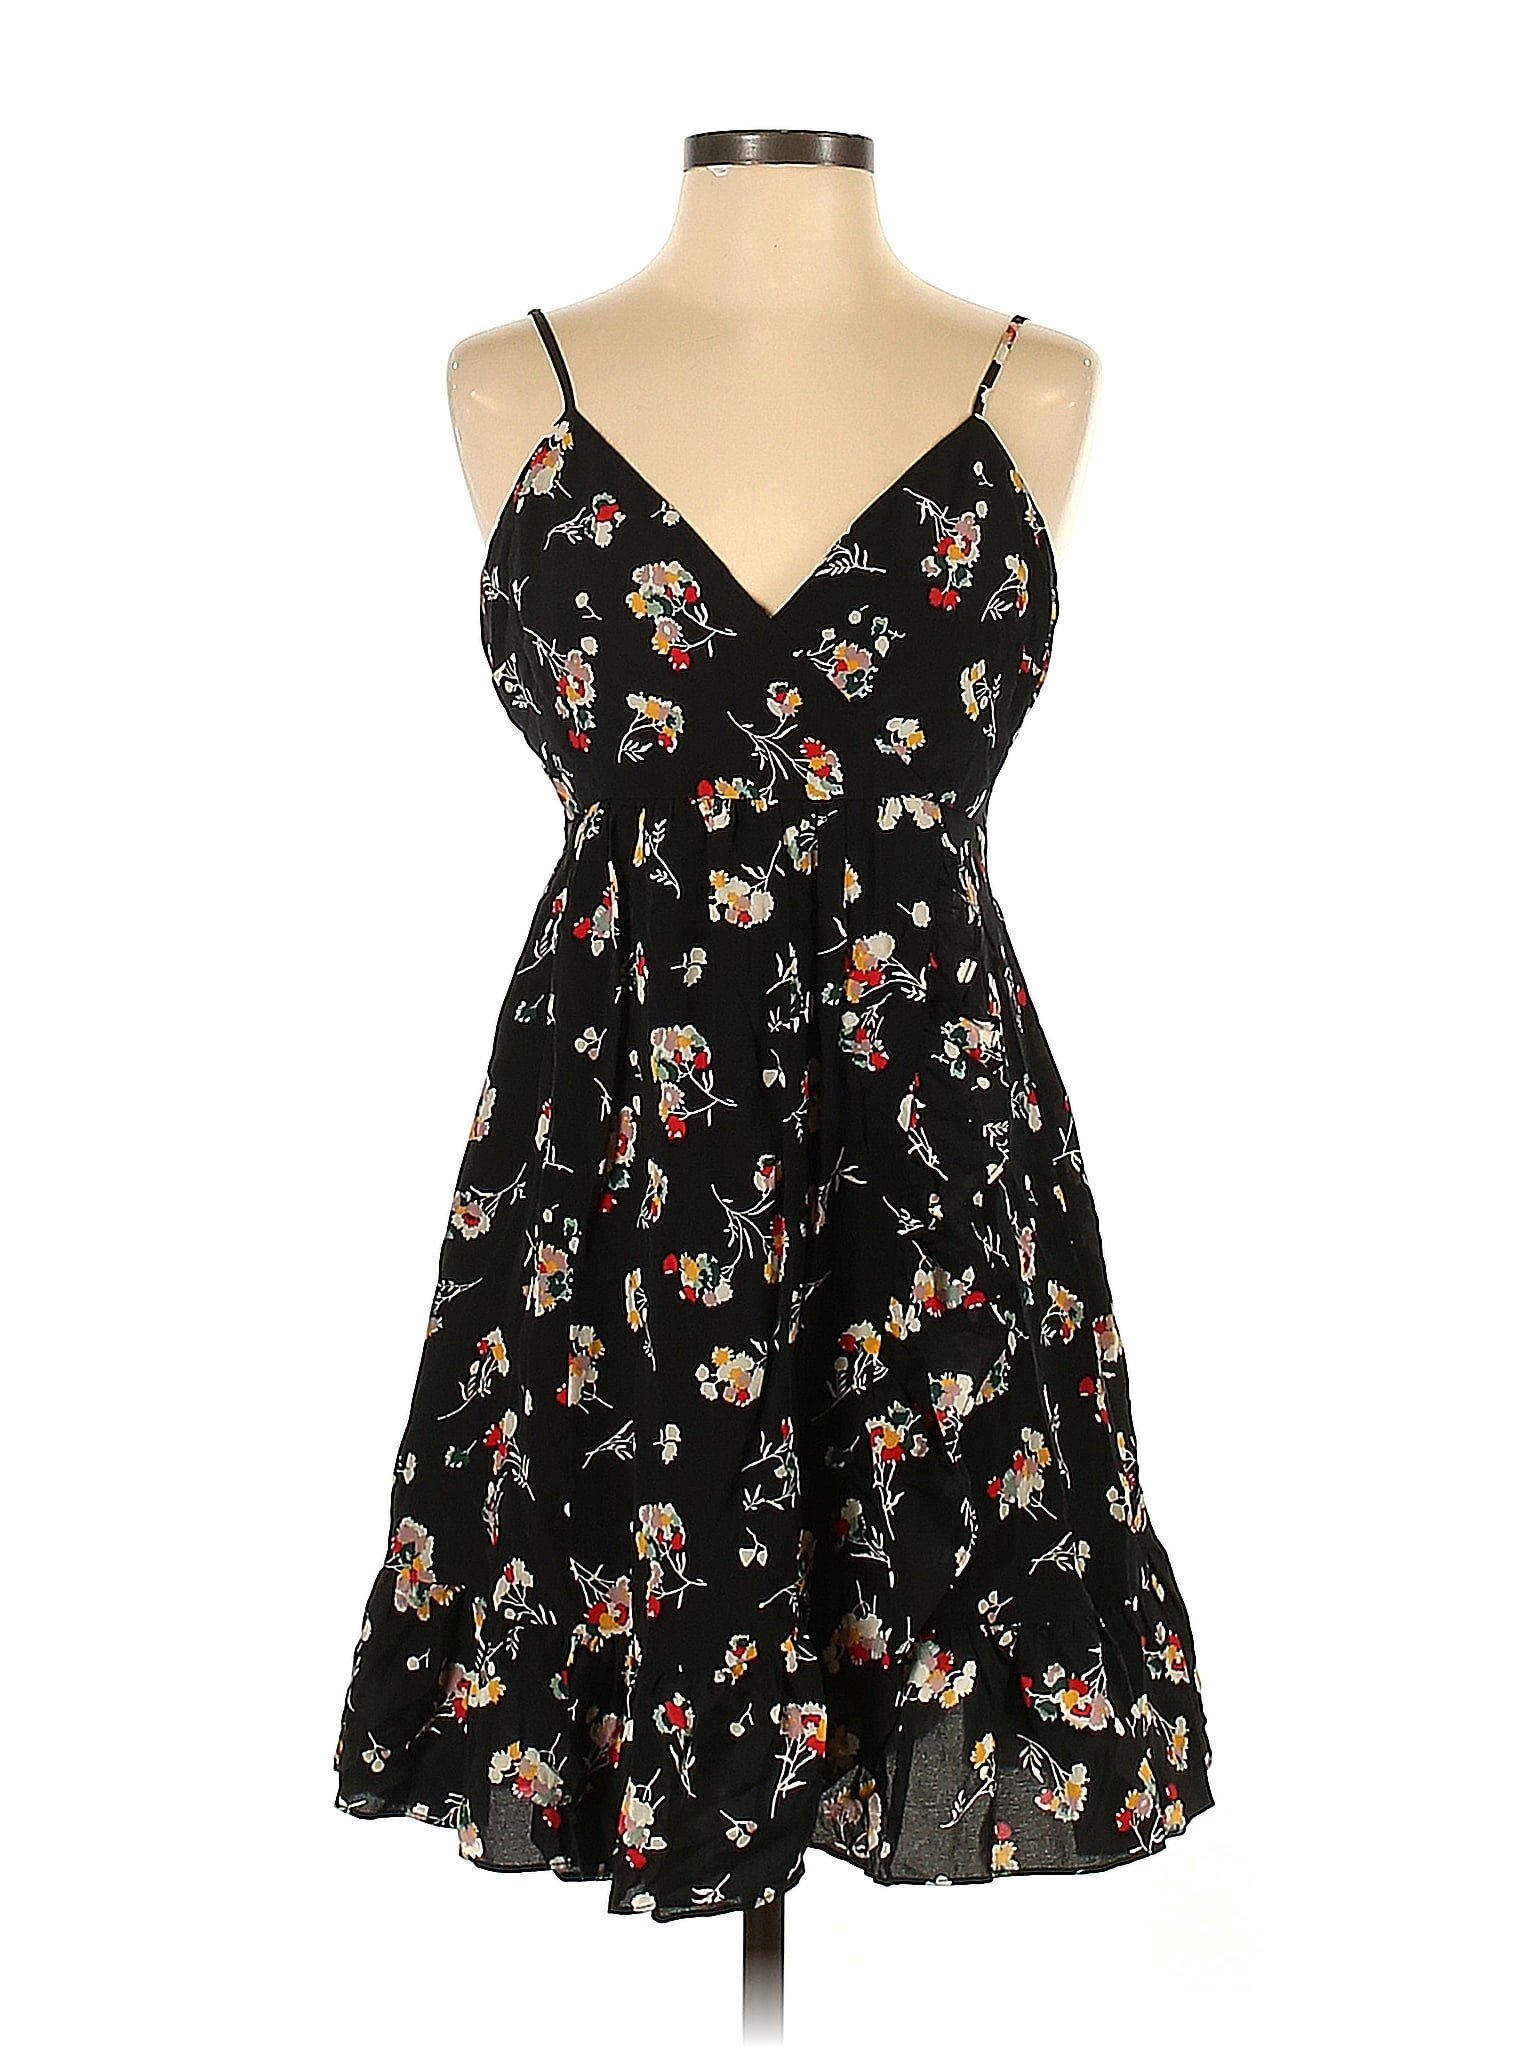 Madewell 100% Silk Floral Black Casual Dress Size 4 - 72% off | thredUP